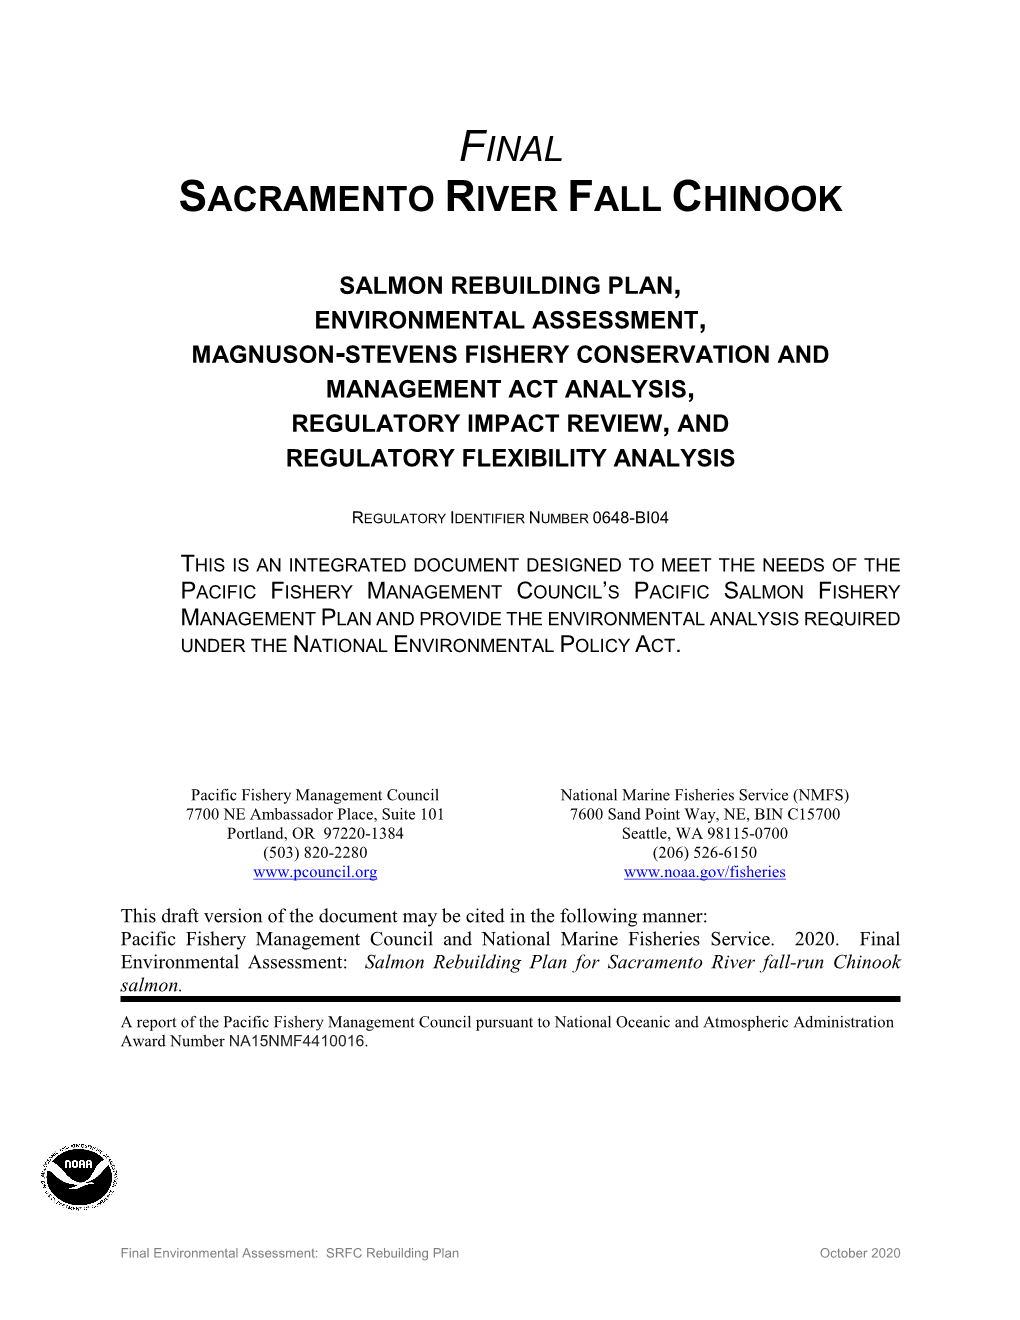 Final Sacramento River Fall Chinook Environmental Assessment